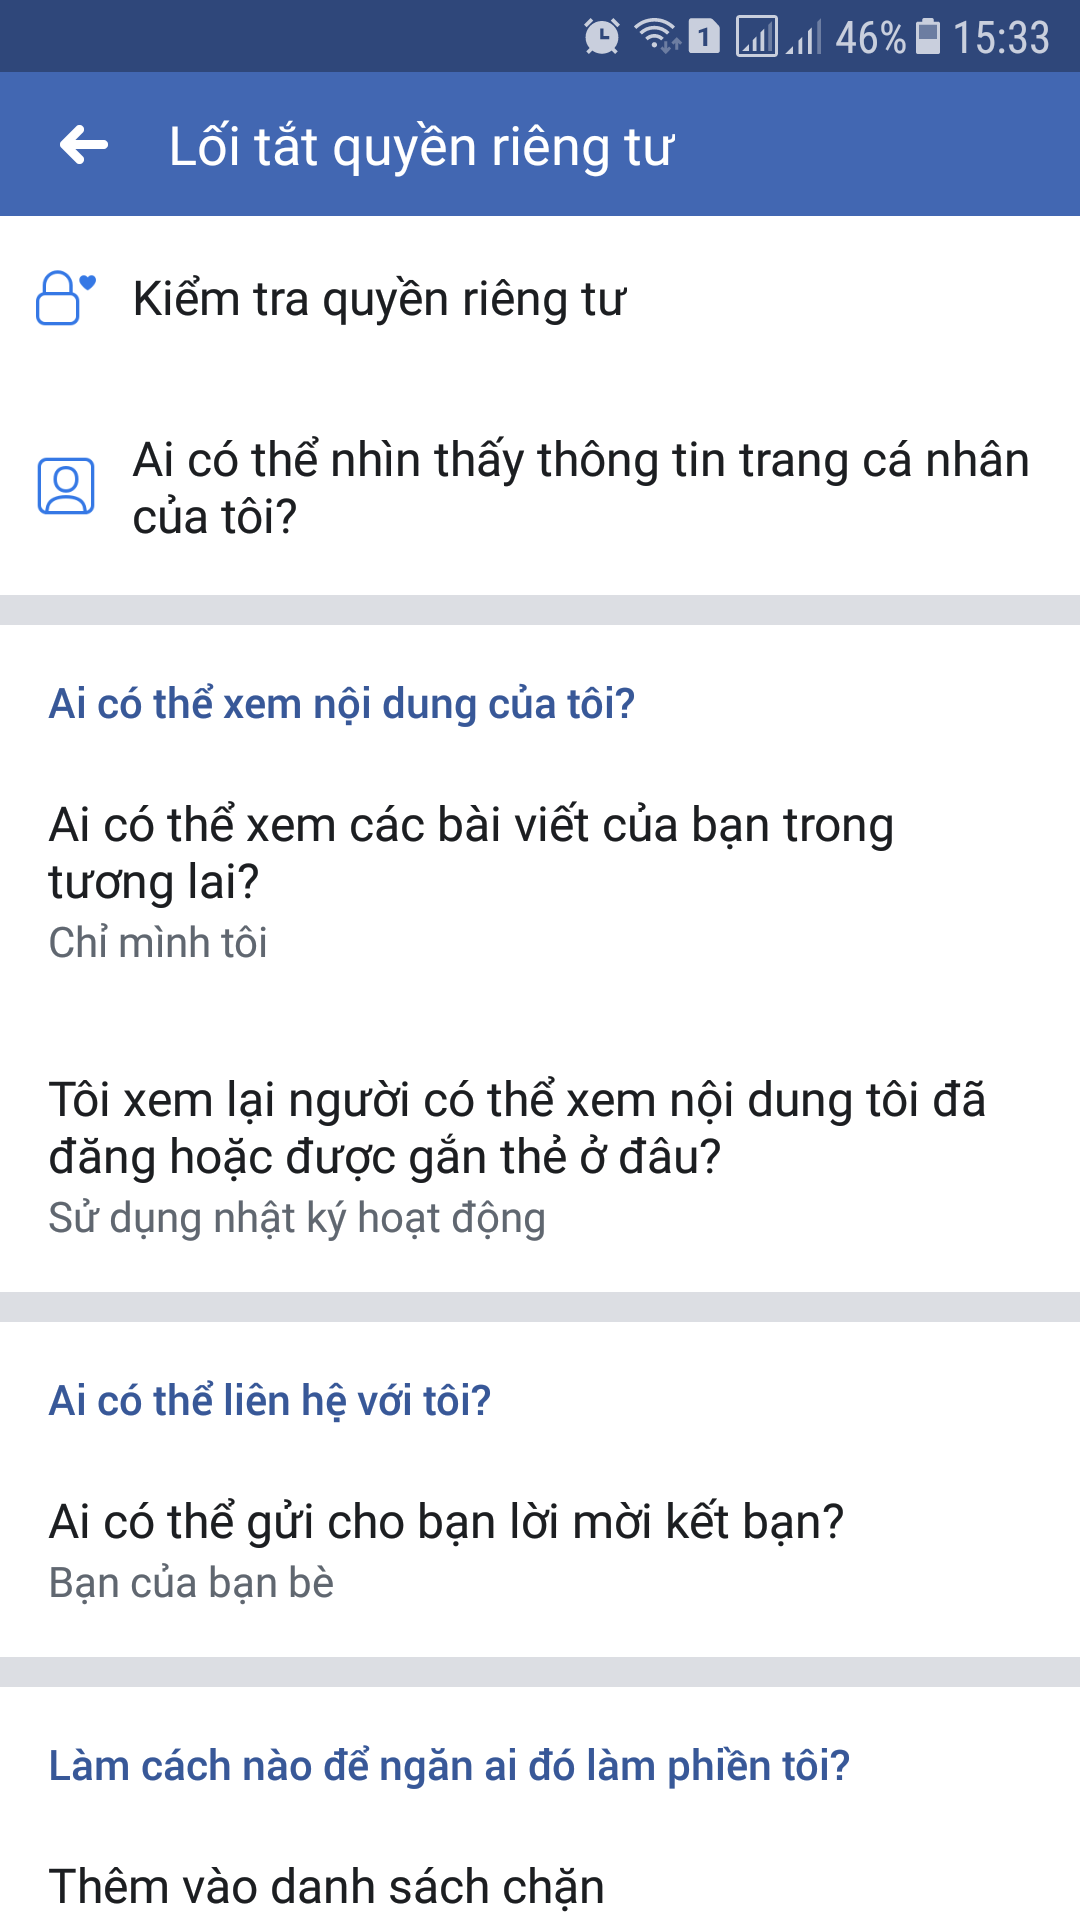 ra soat go bo ung dung thu thap du lieu ca nhan tren facebook